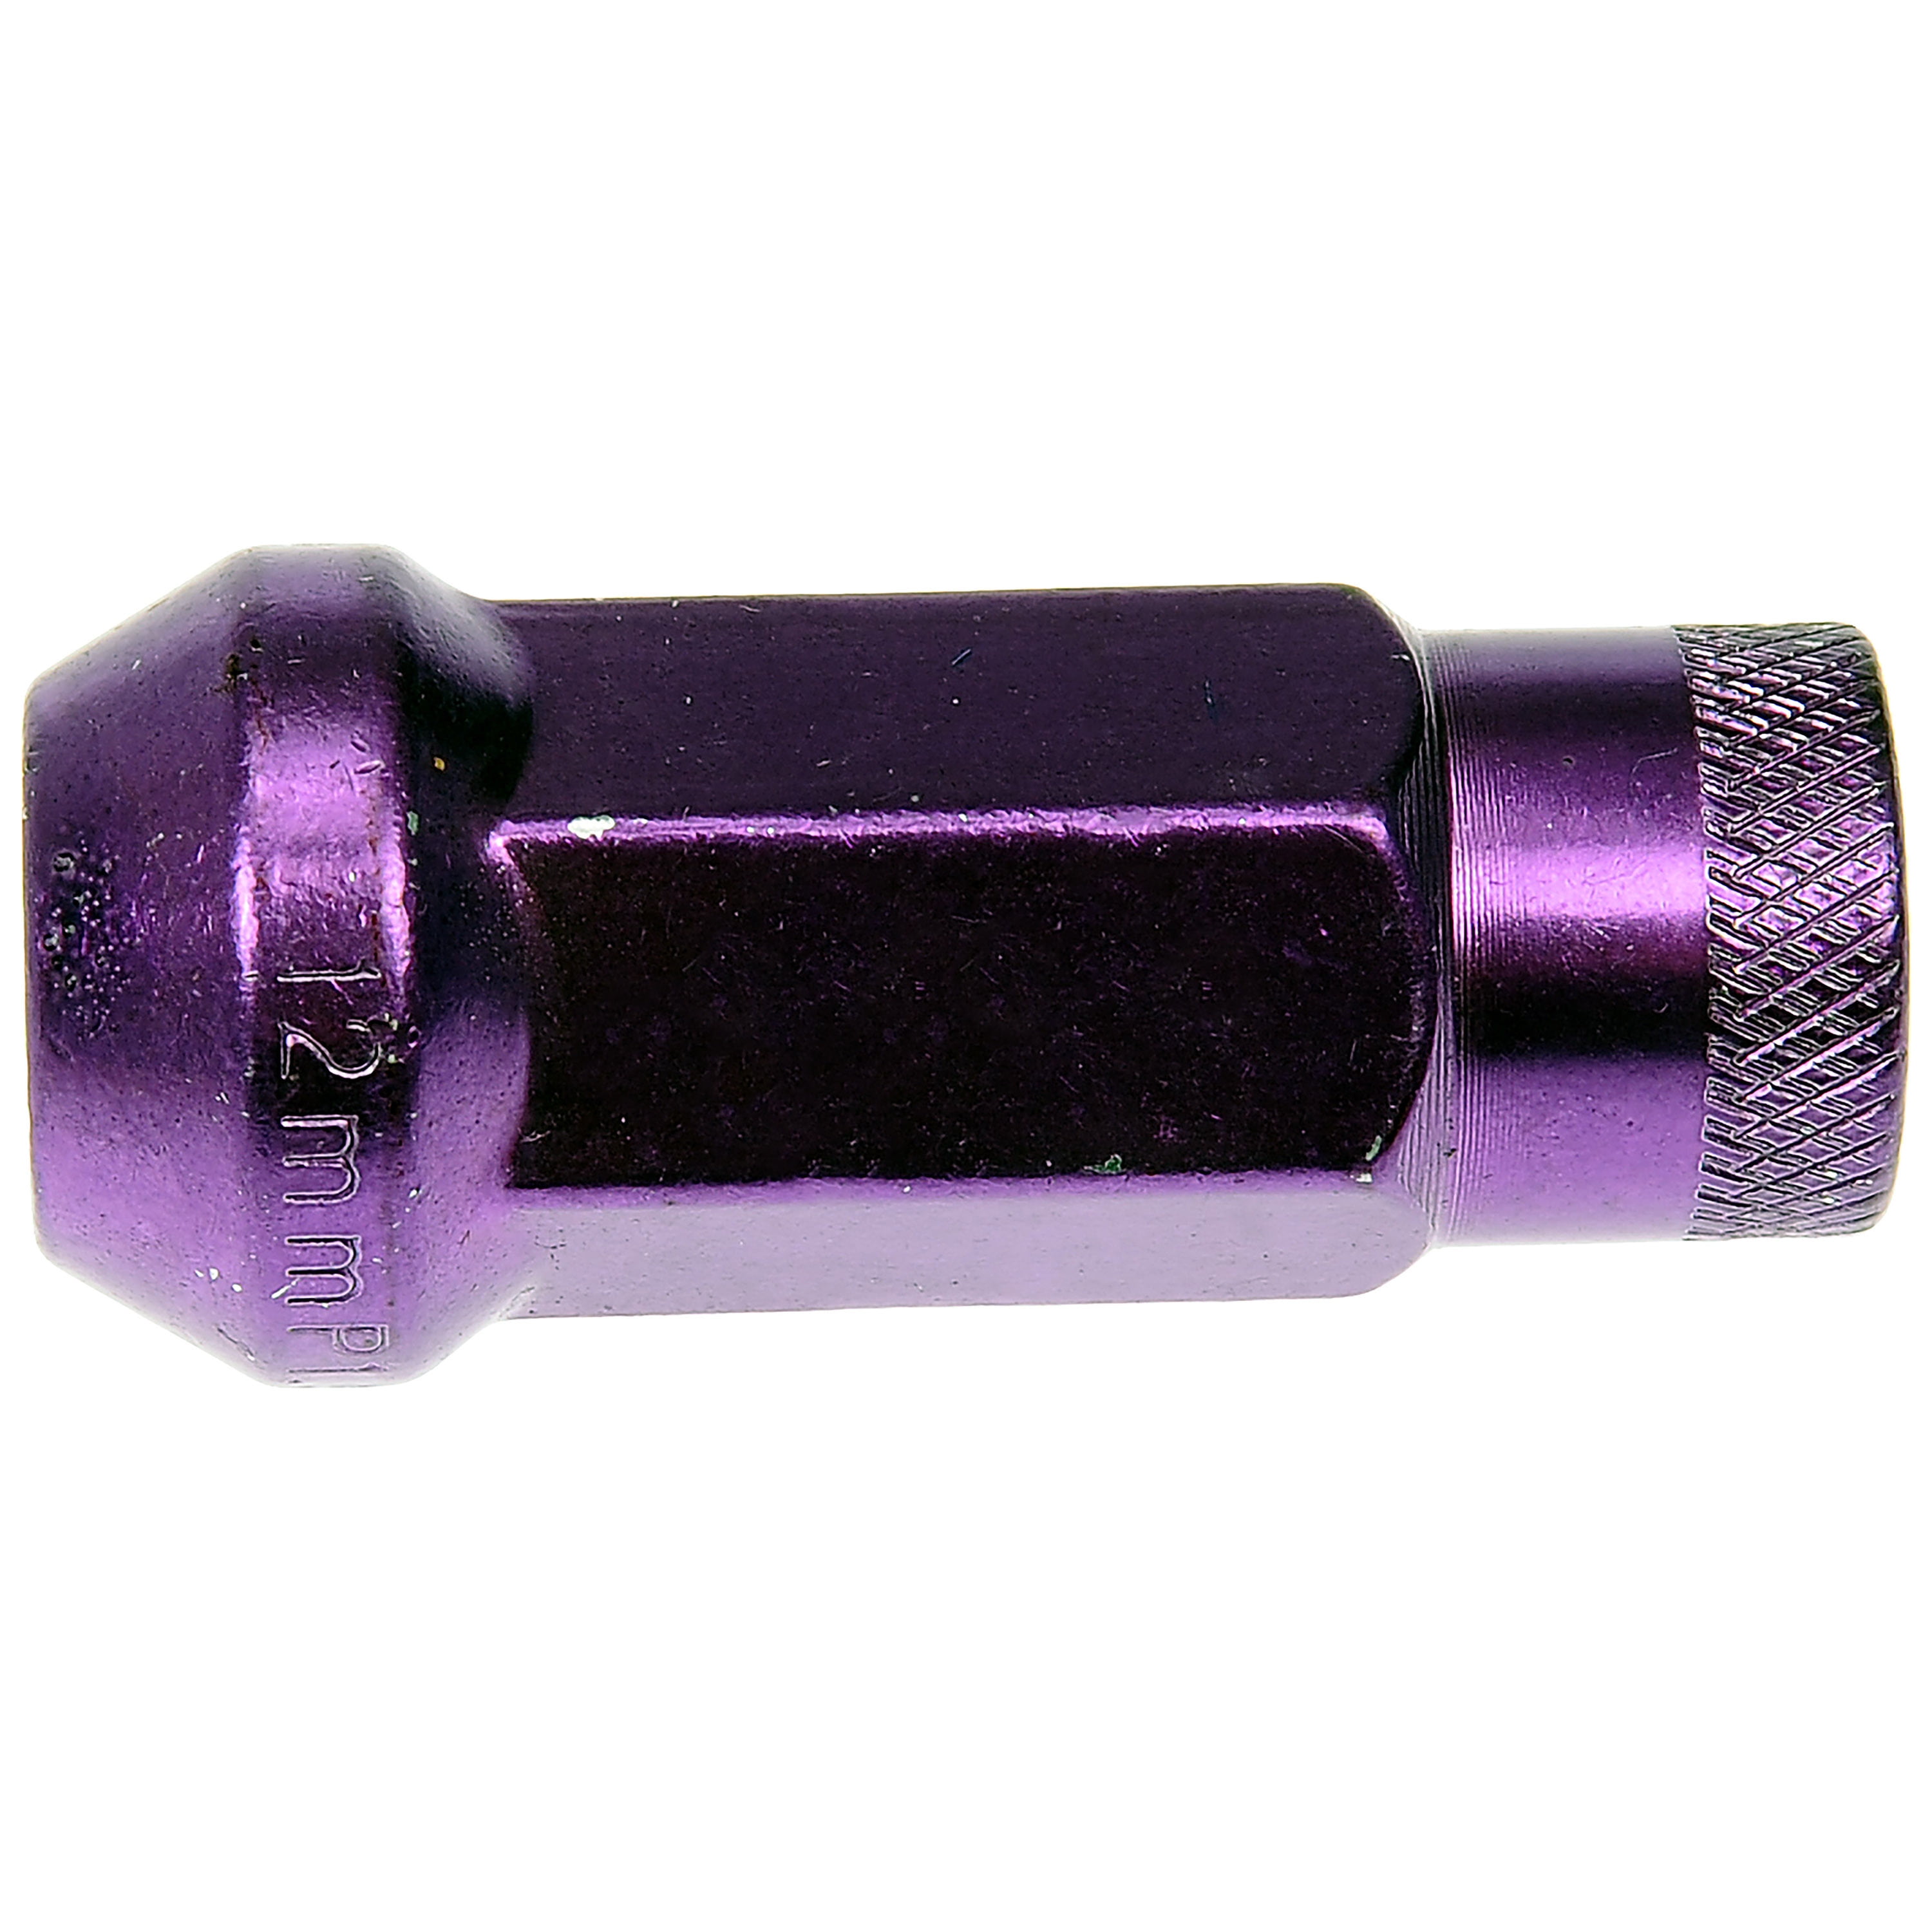 Dorman 713-385J Wheel Lug Nut for Specific Models, Purple Chrome